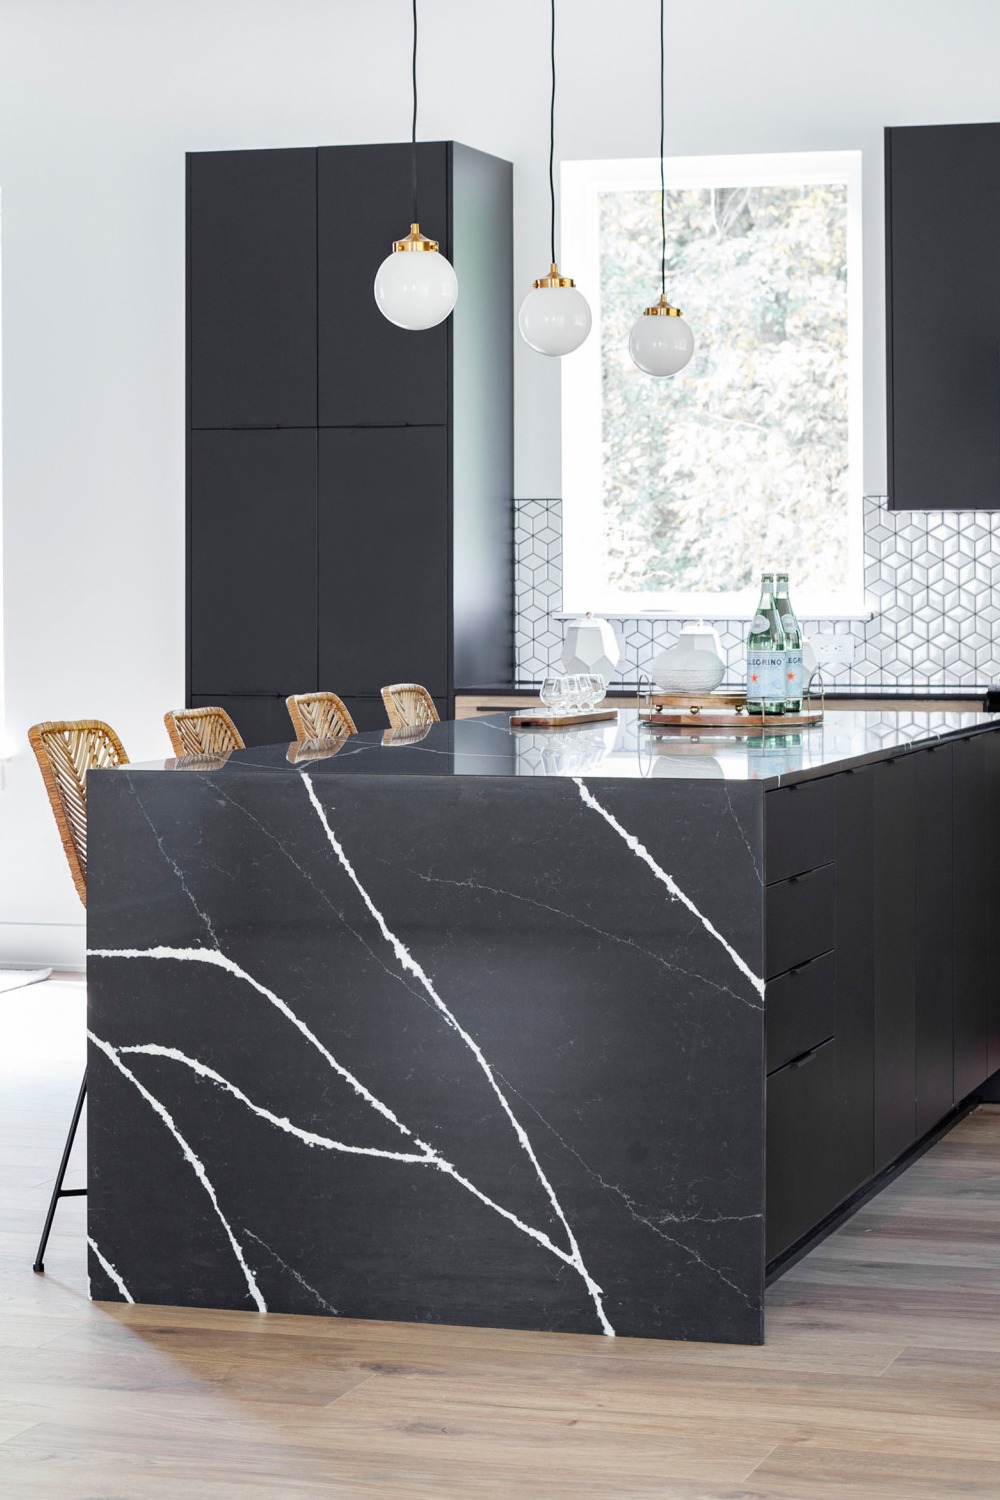 Black Quartz Countertops Sleek And Modern Appearance Black Quartz Counters Kitchen Countertops Low Maintenance Elegance Shine Space Subtle